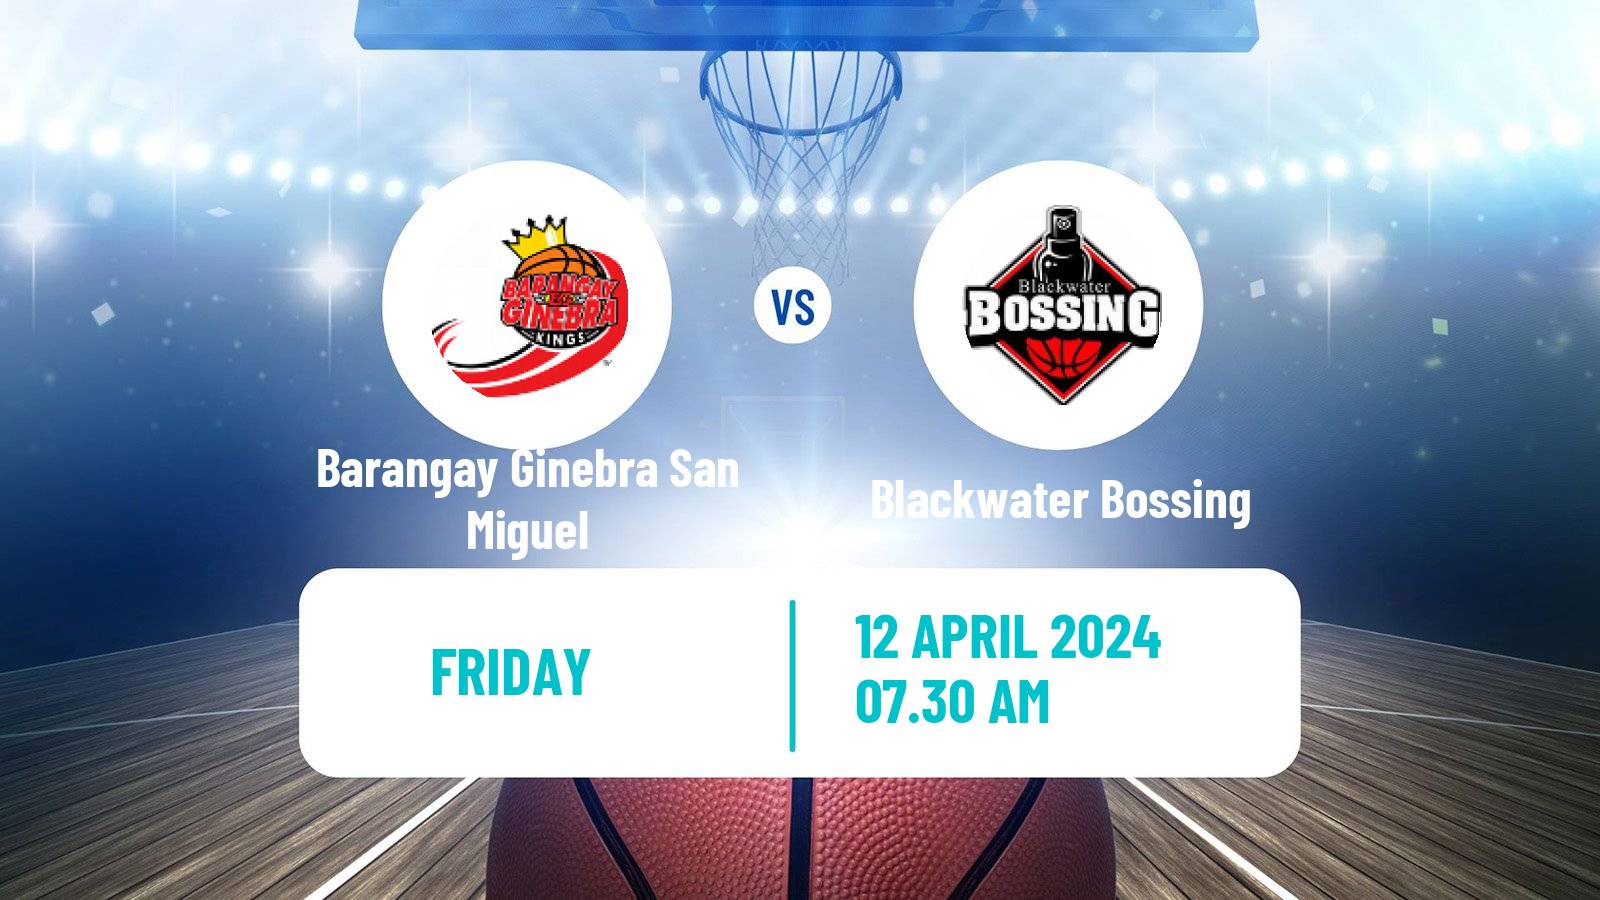 Basketball Philippines Cup Barangay Ginebra San Miguel - Blackwater Bossing